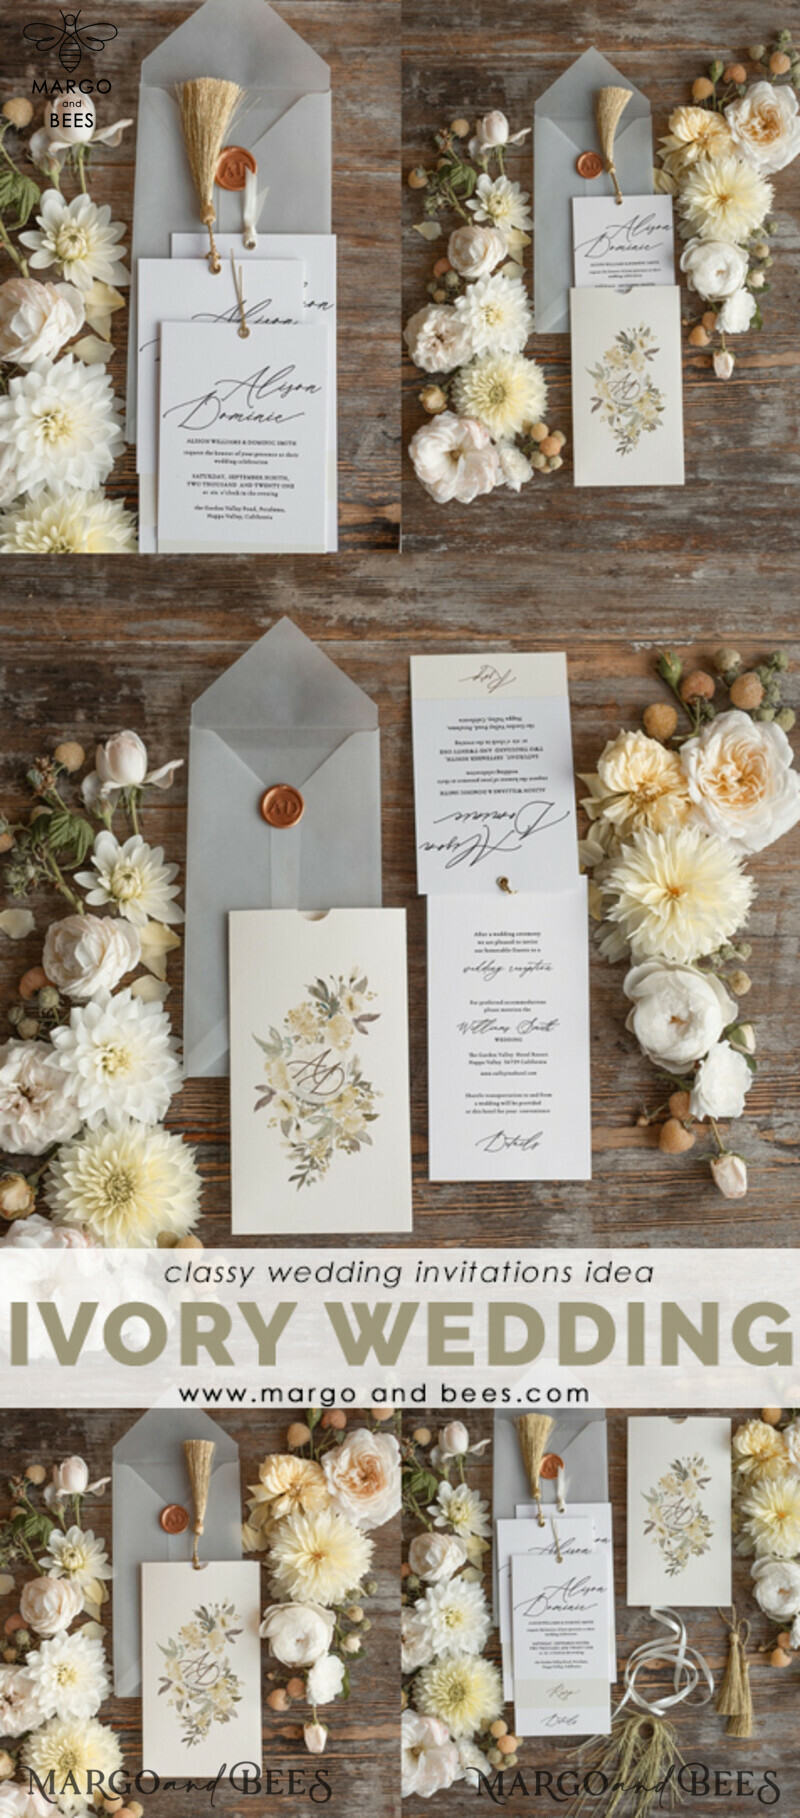  Elegant And Minimalistic Wedding Invitations, Luxury Wedding Invitations With Golden Tassel, Simple And Classic Wedding Cards With Vellum Envelope-6